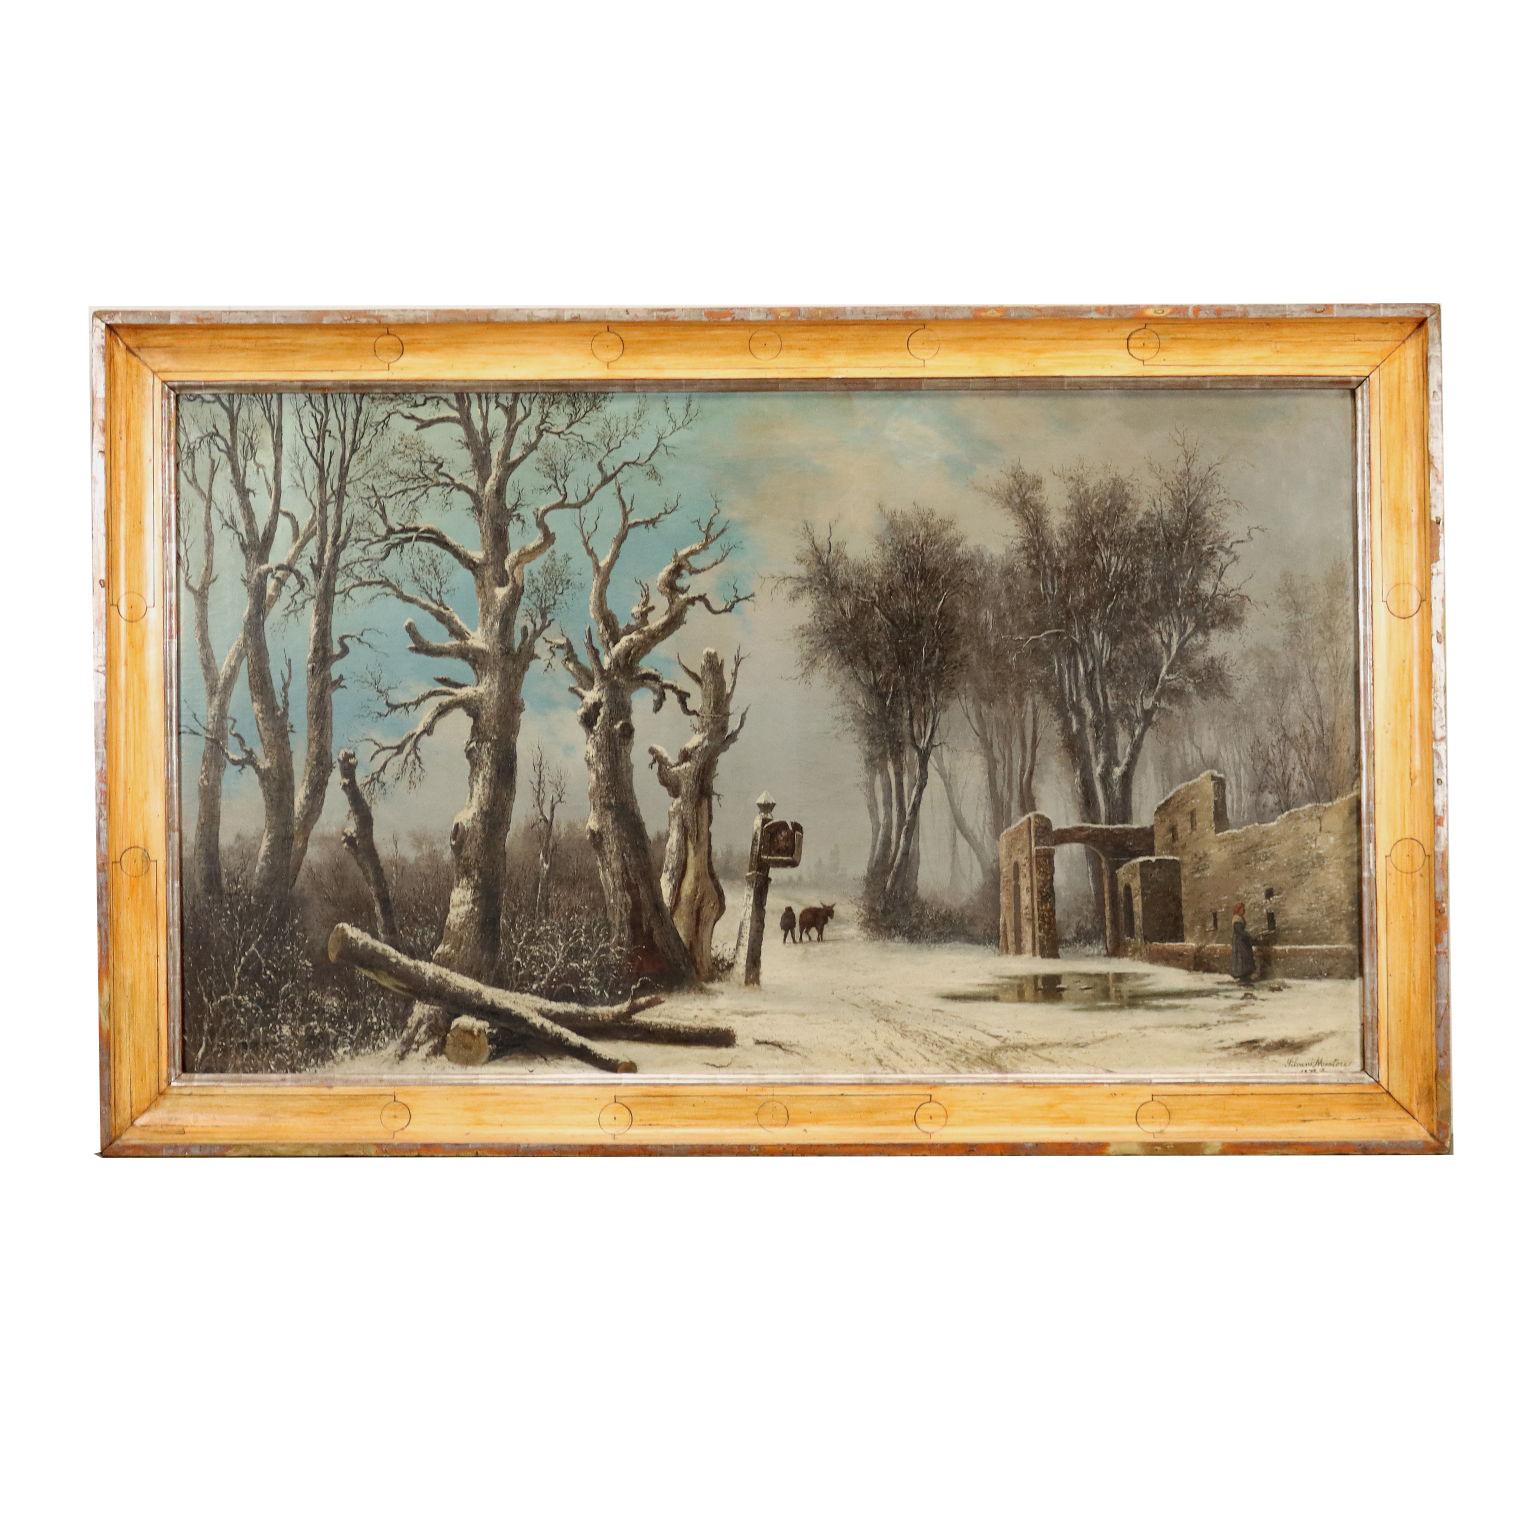 Mentore Silvani Landscape Painting - Snowy Landscape with Figures, 1872